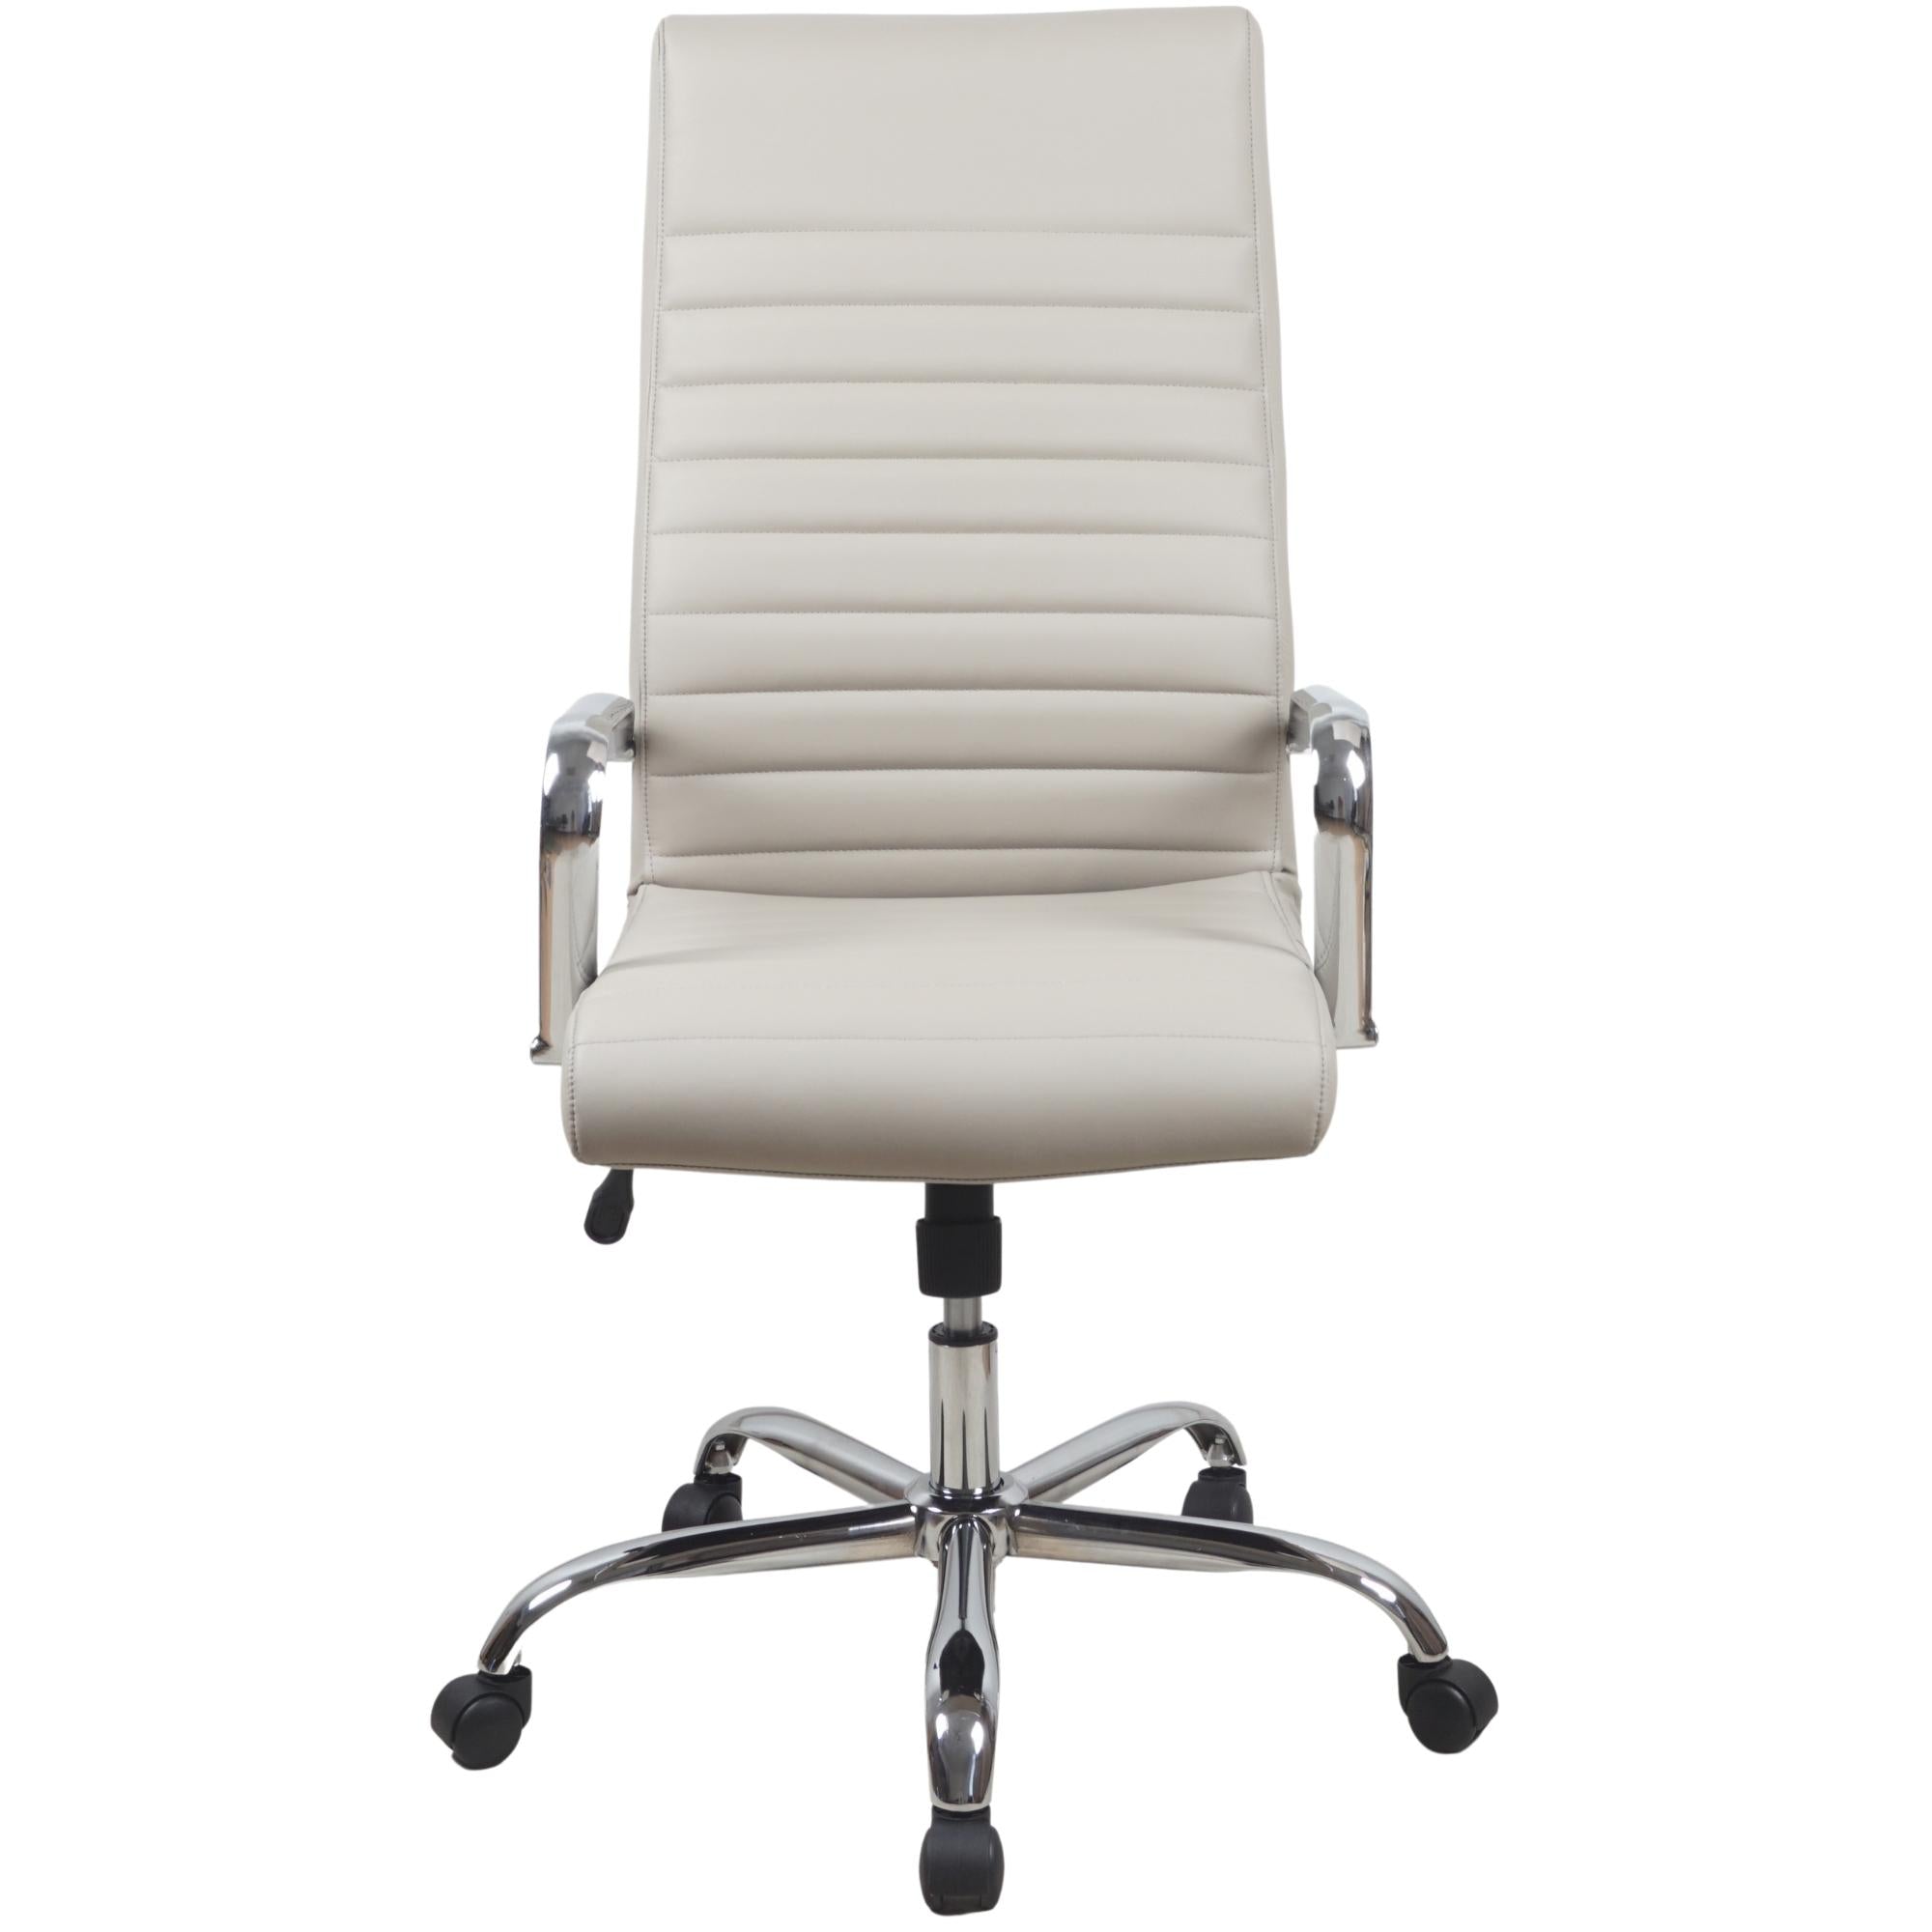 RealBiz II Modern Comfort Series High-Back LeatherPro Chair, Taupe